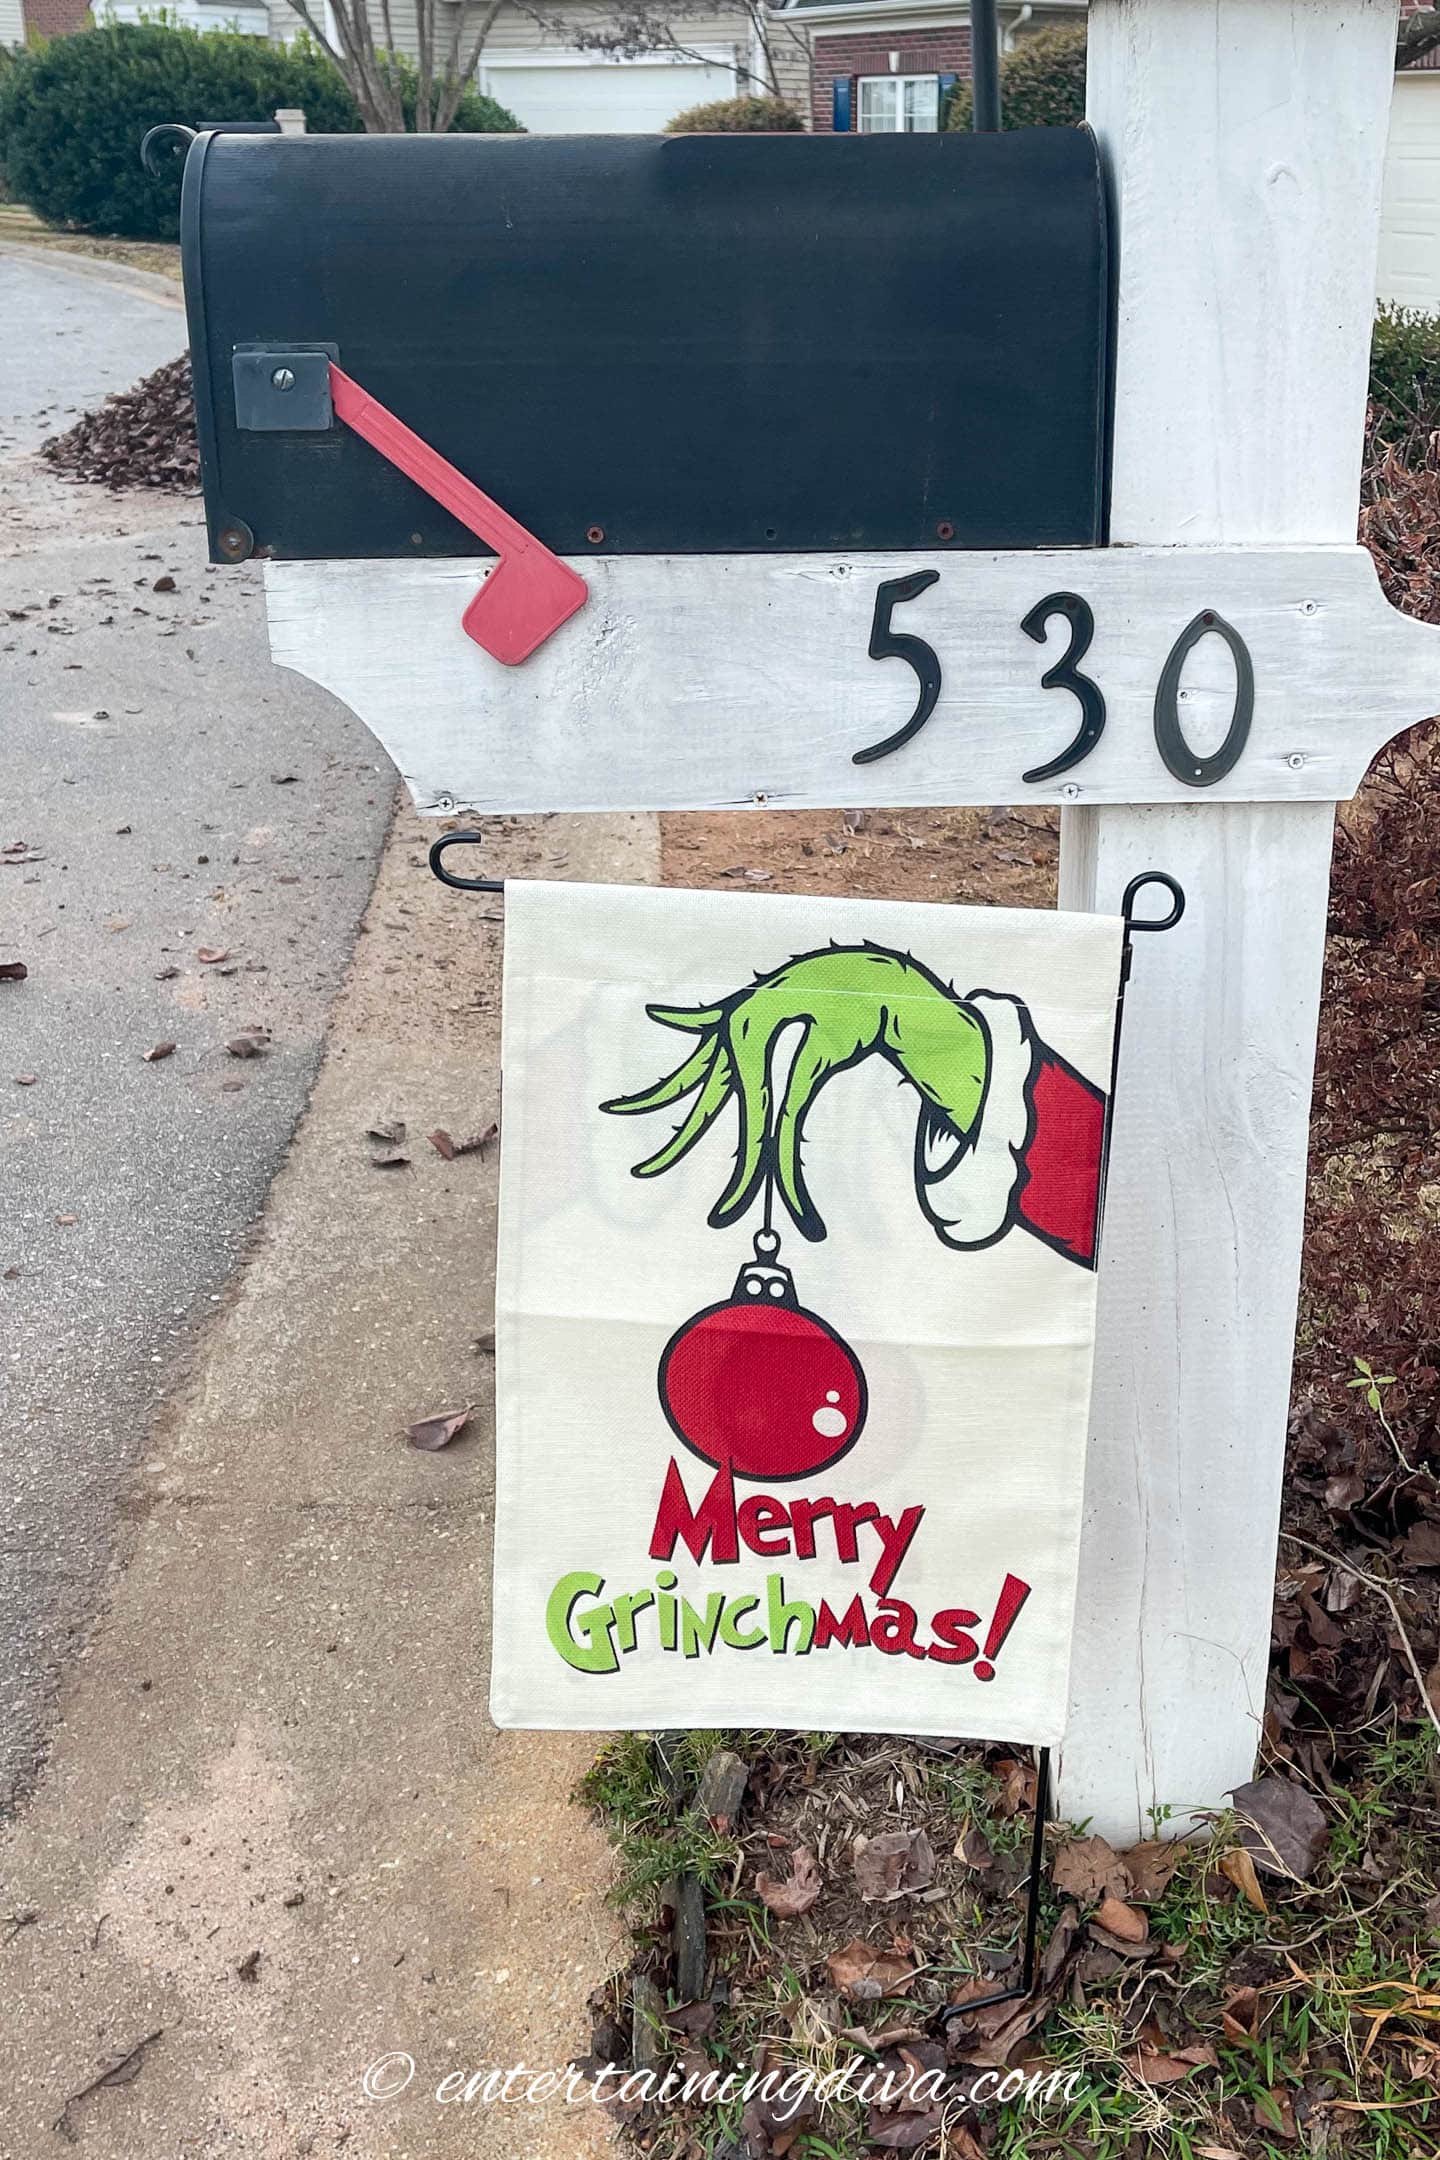 Merry Grinchmas garden flag in front of a mailbox